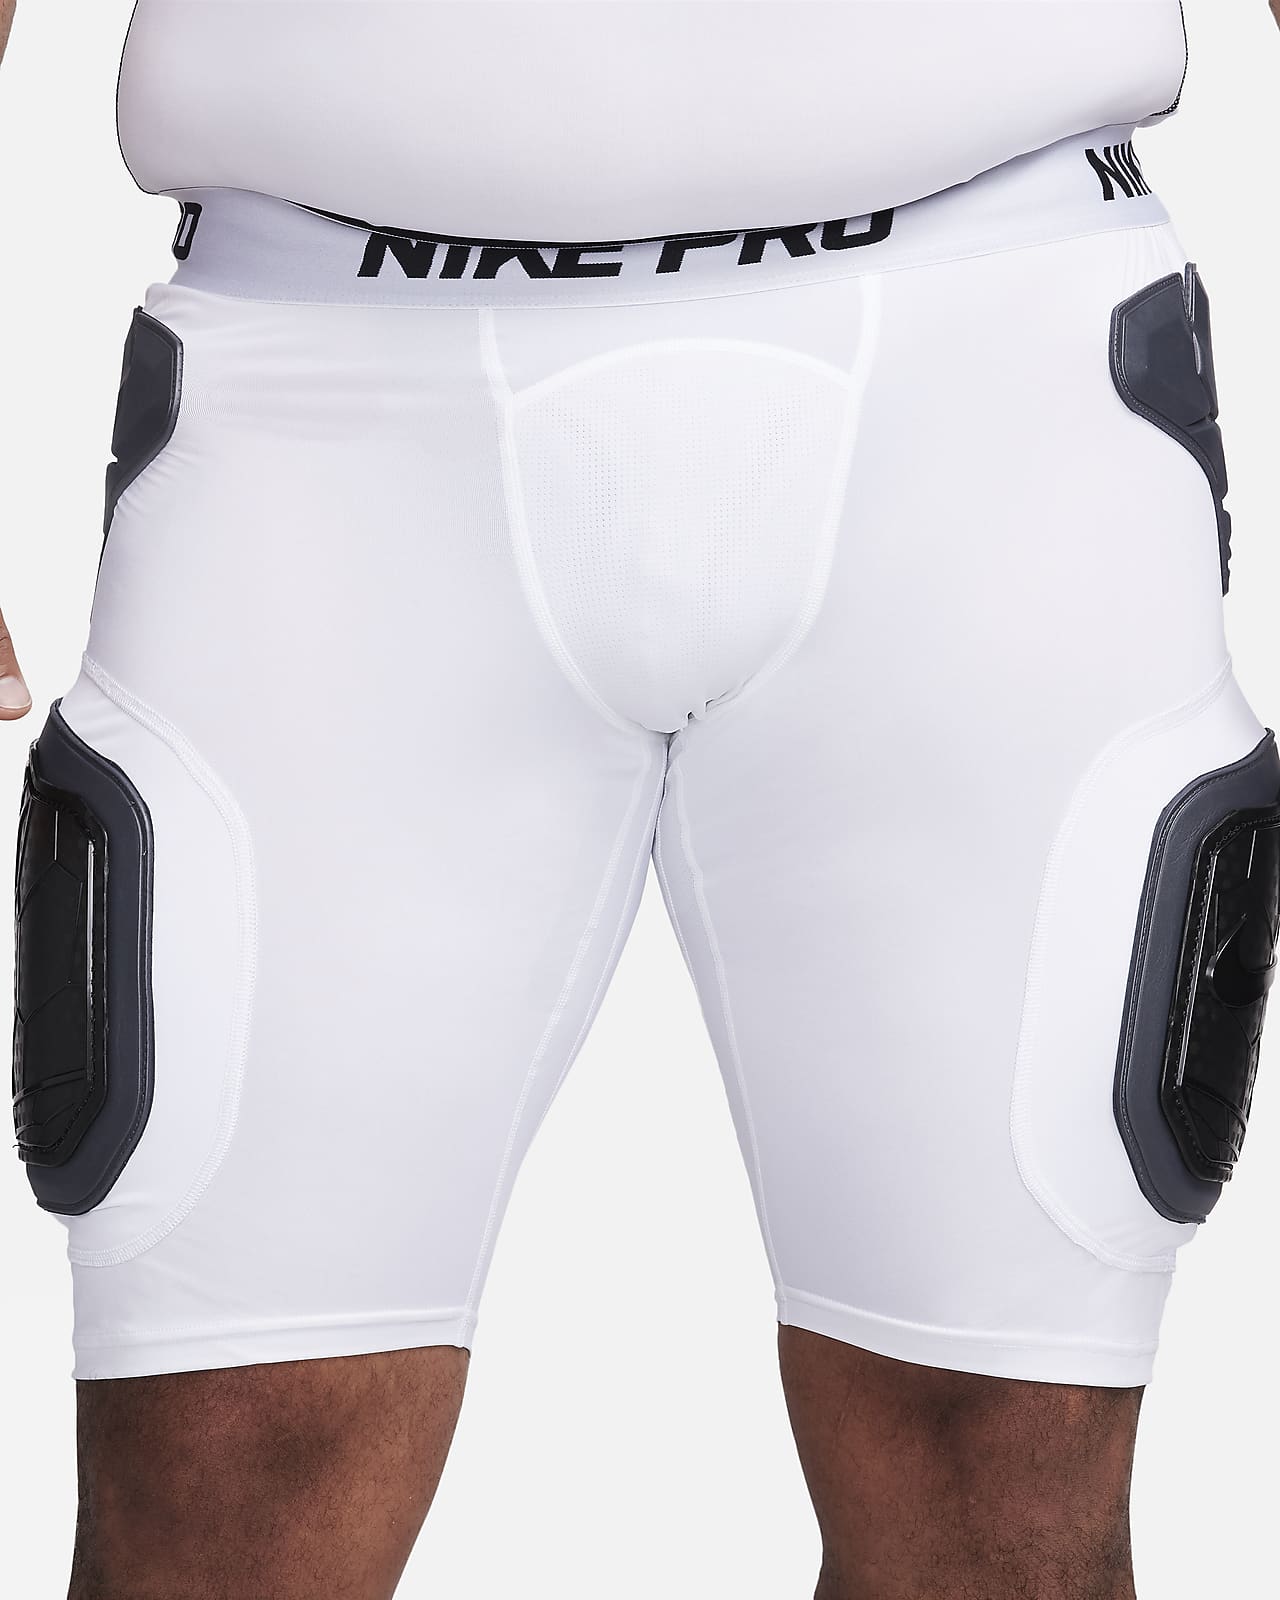 Nike, Shorts, Nike Pro Combat Hyperstrong 5pad Football Compression  Shorts